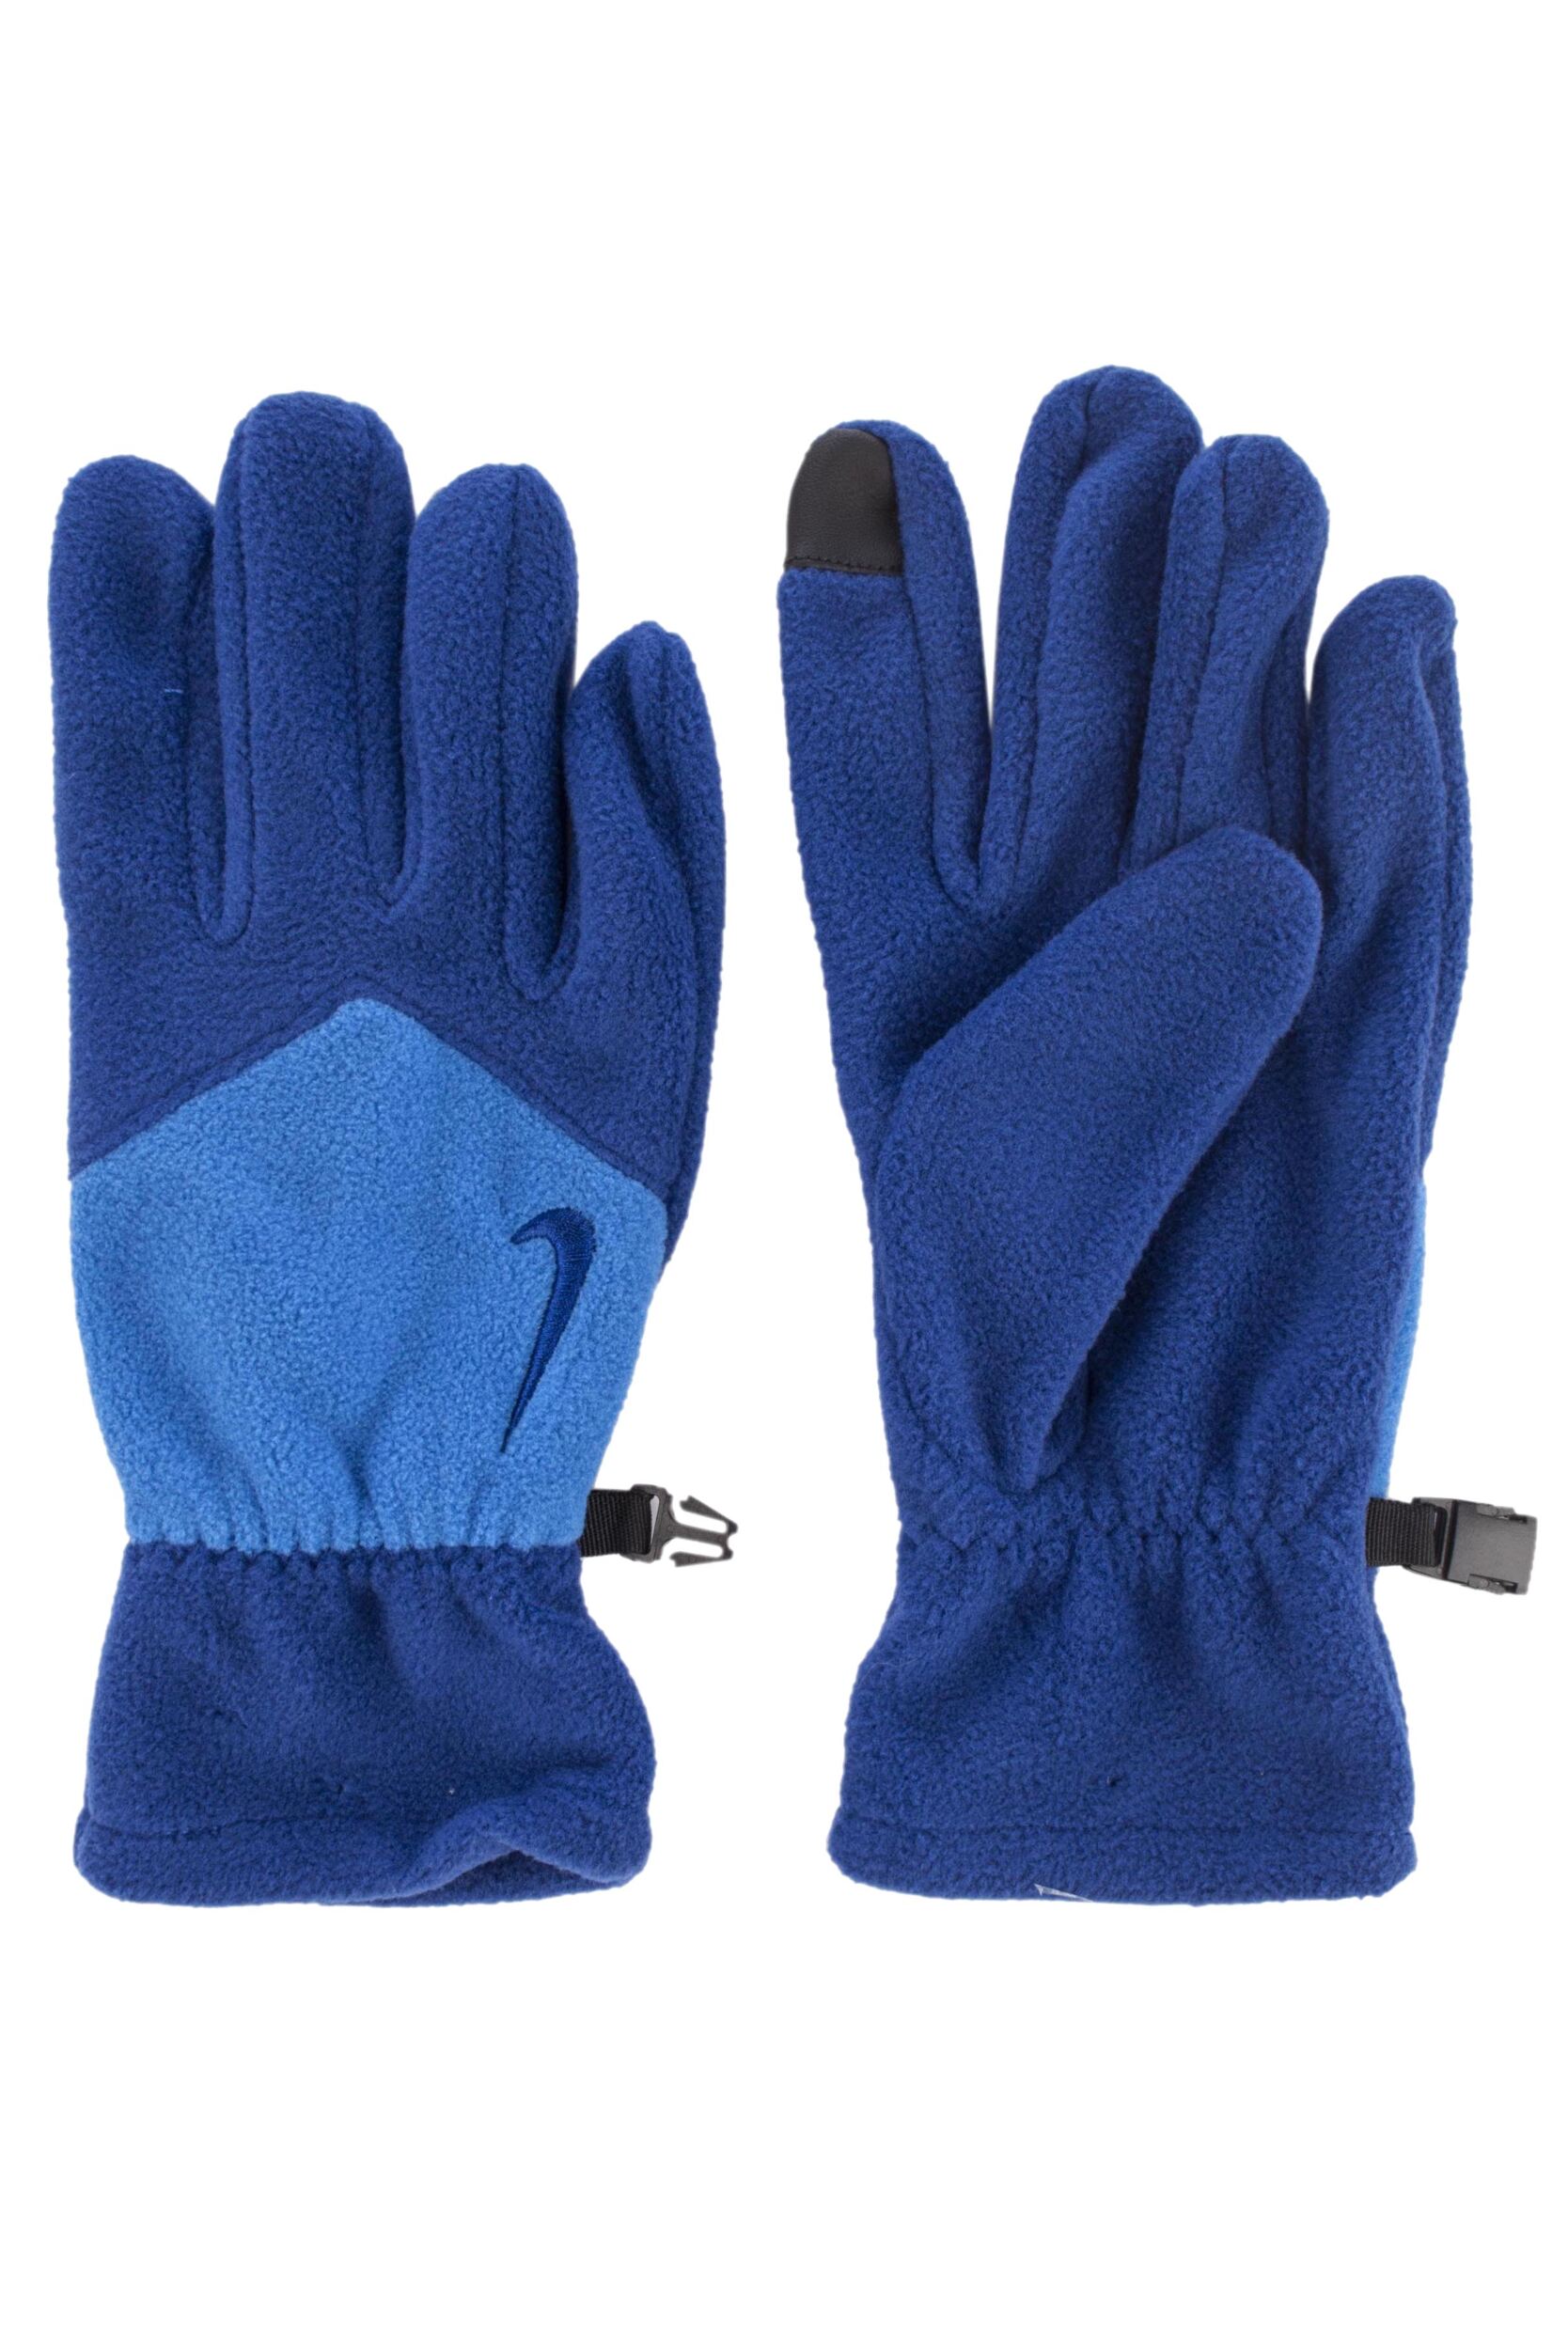 Mens 1 Pair Nike Sports Fleece Cold Weather Training Tech Gloves | eBay